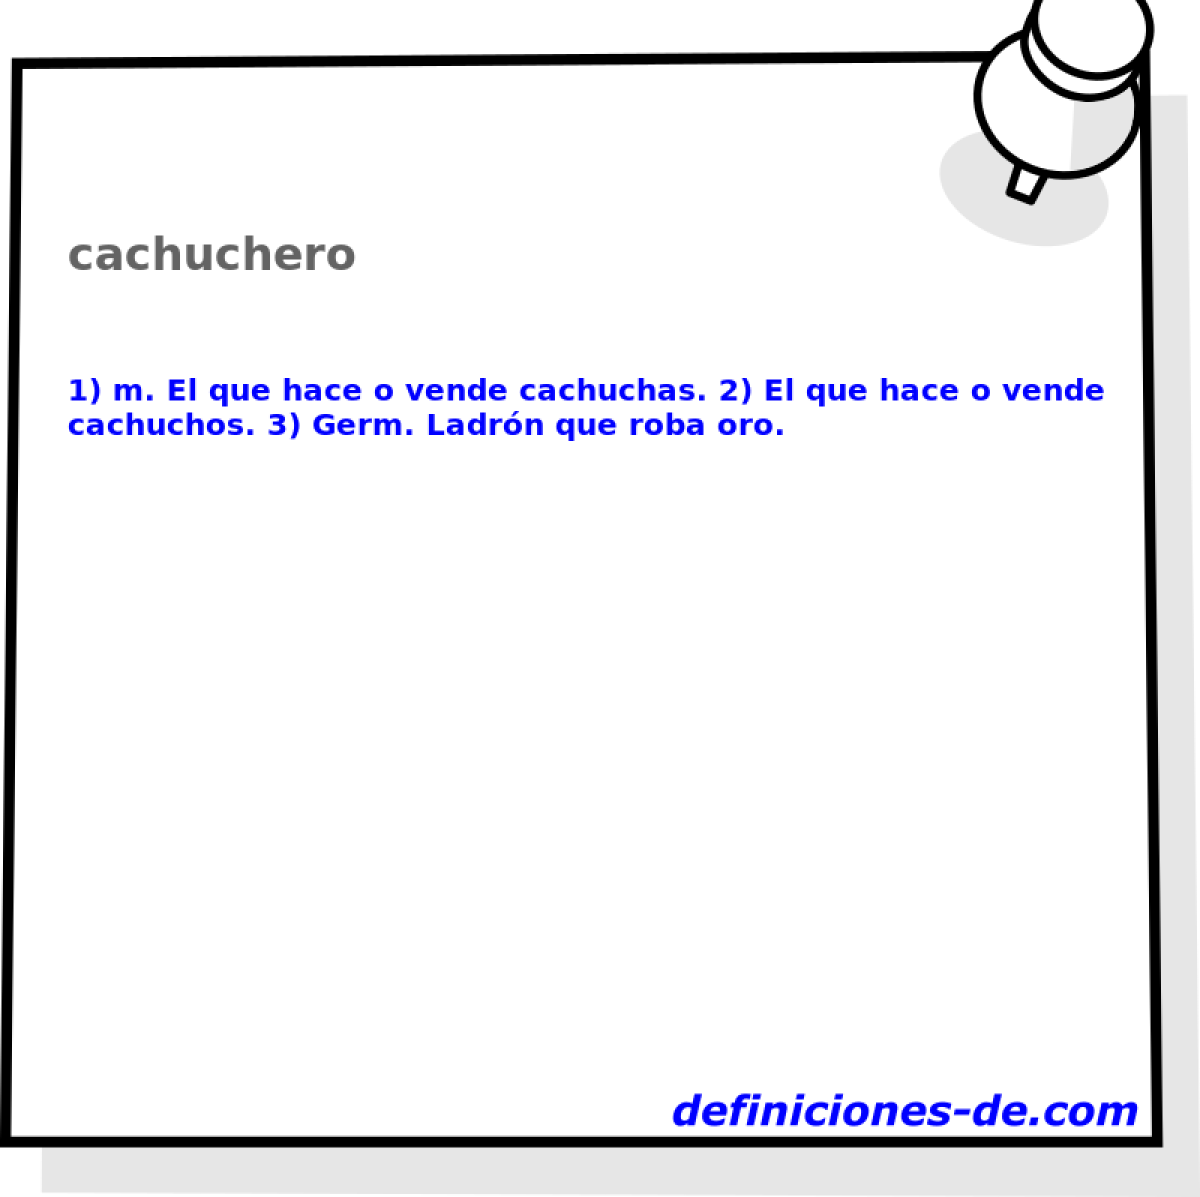 cachuchero 